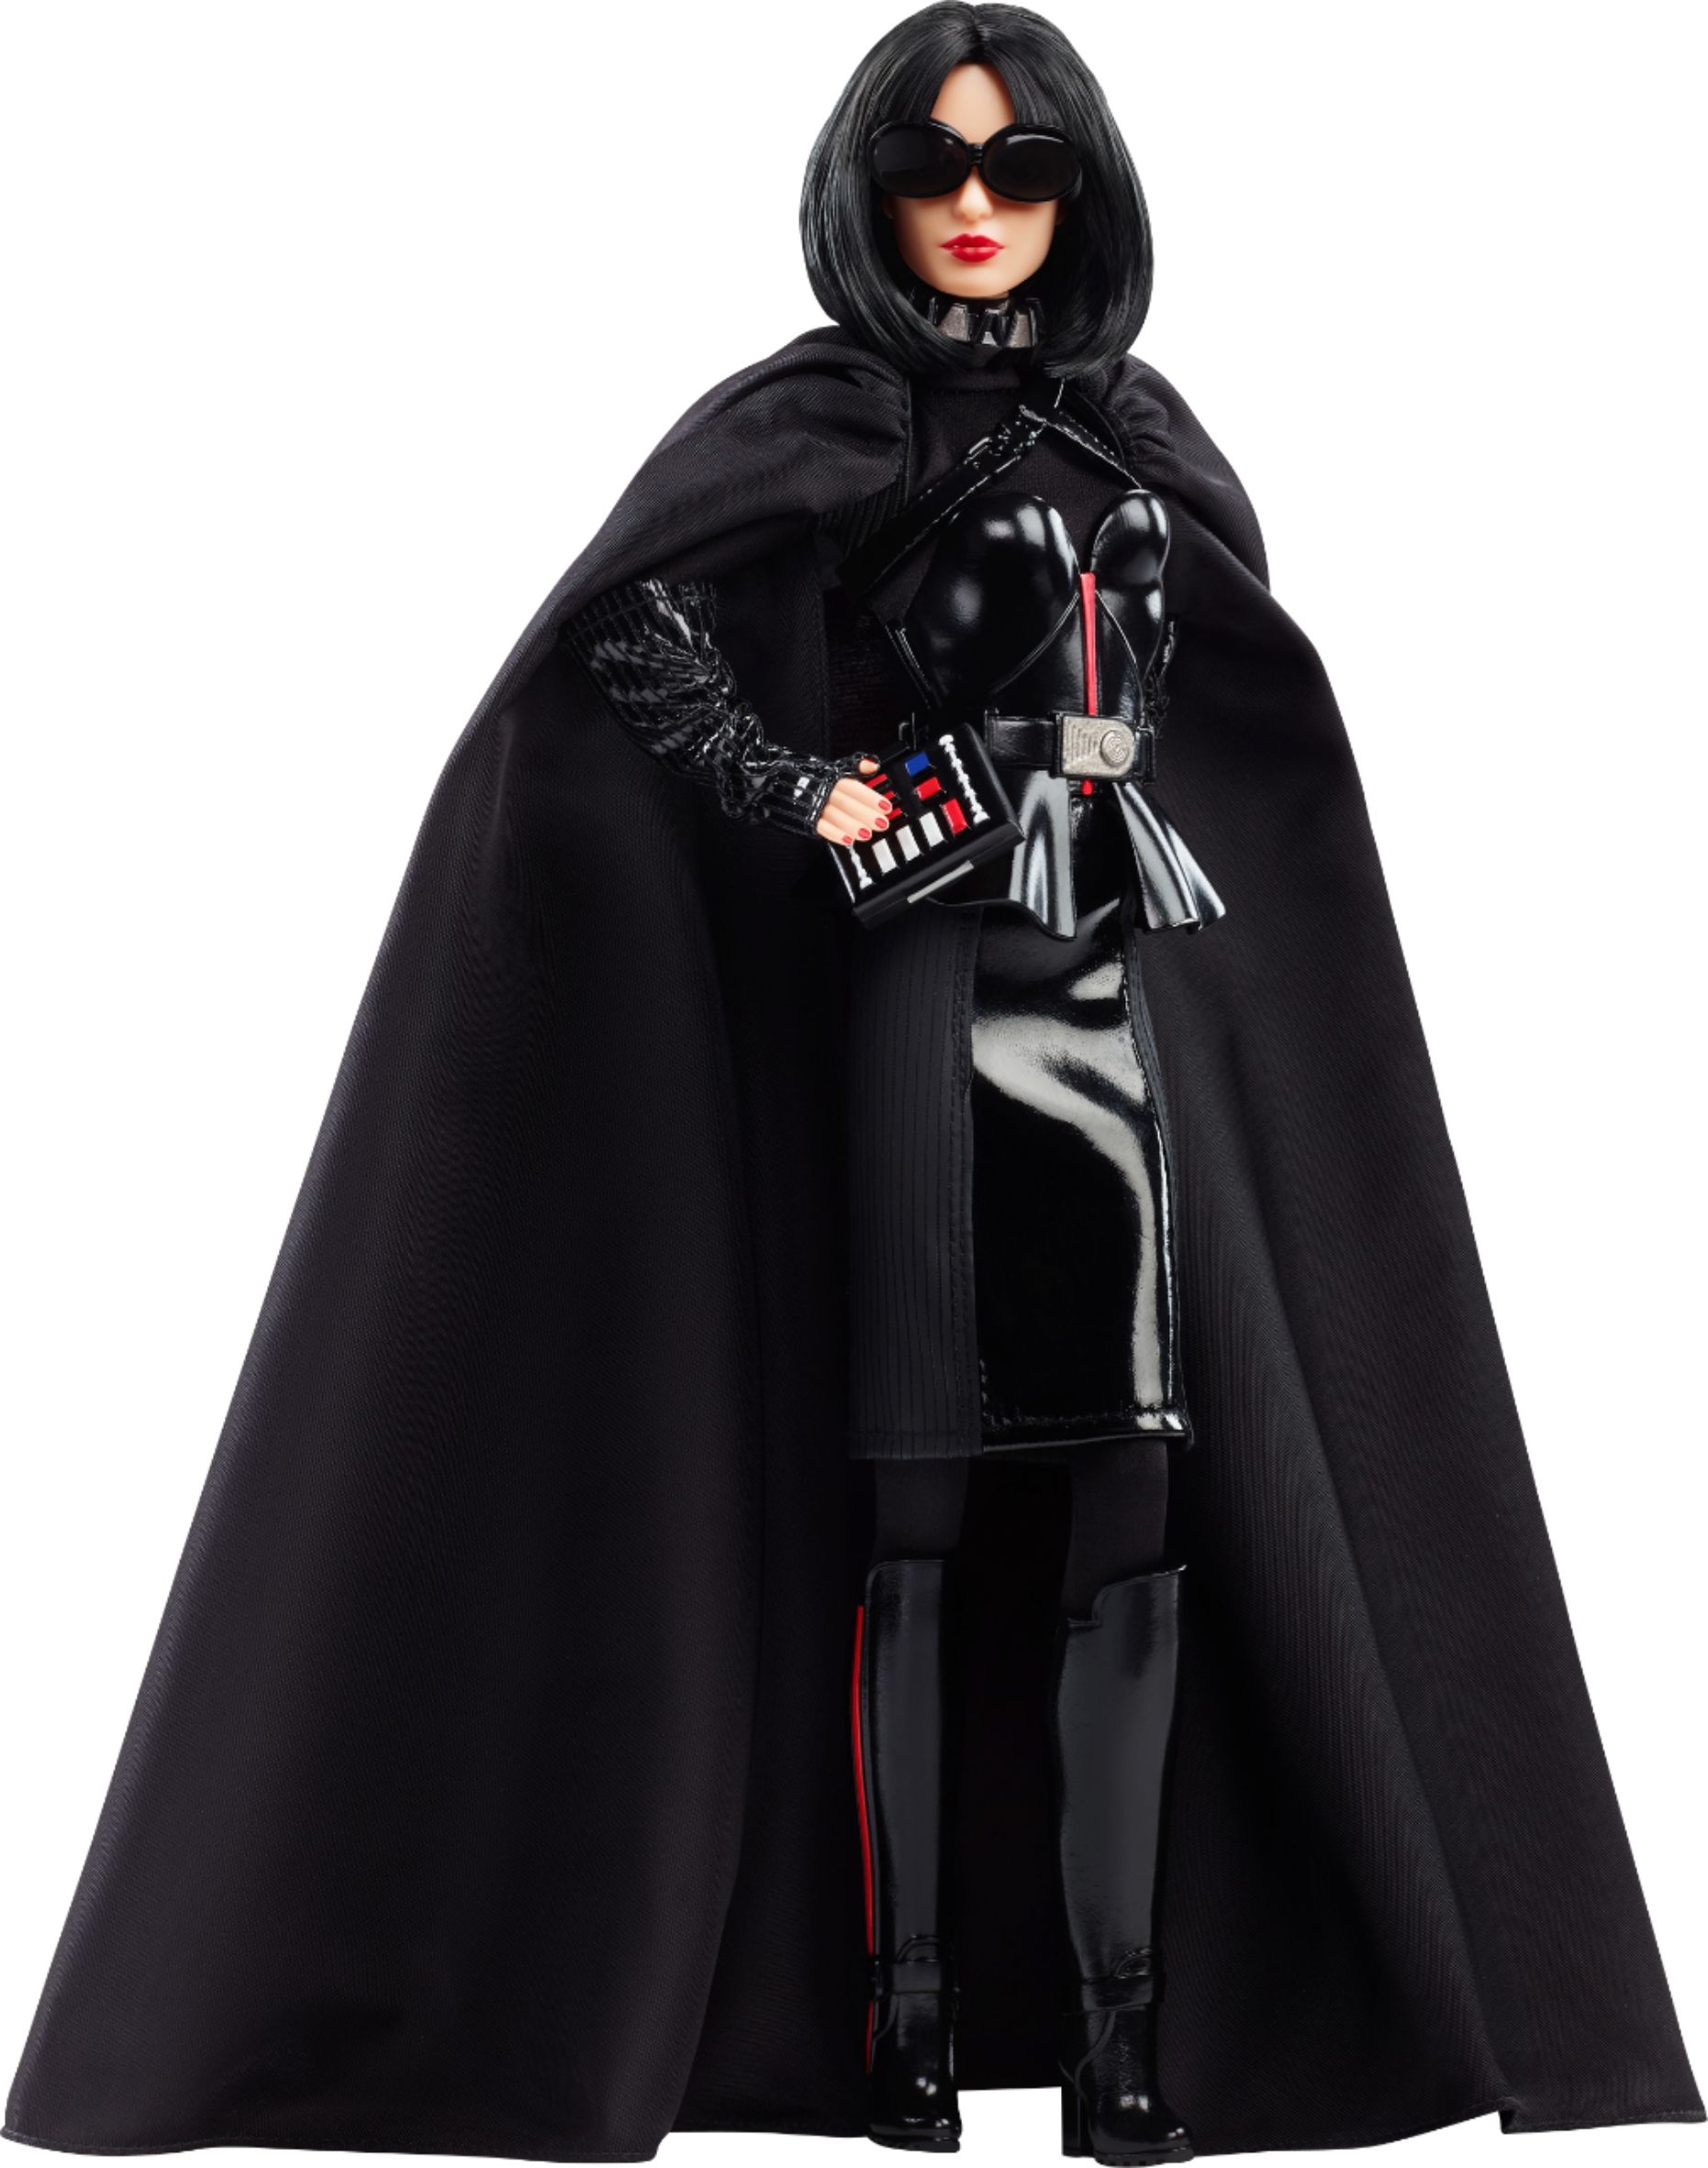 Star Wars Darth Vader 11.5" Barbie Doll